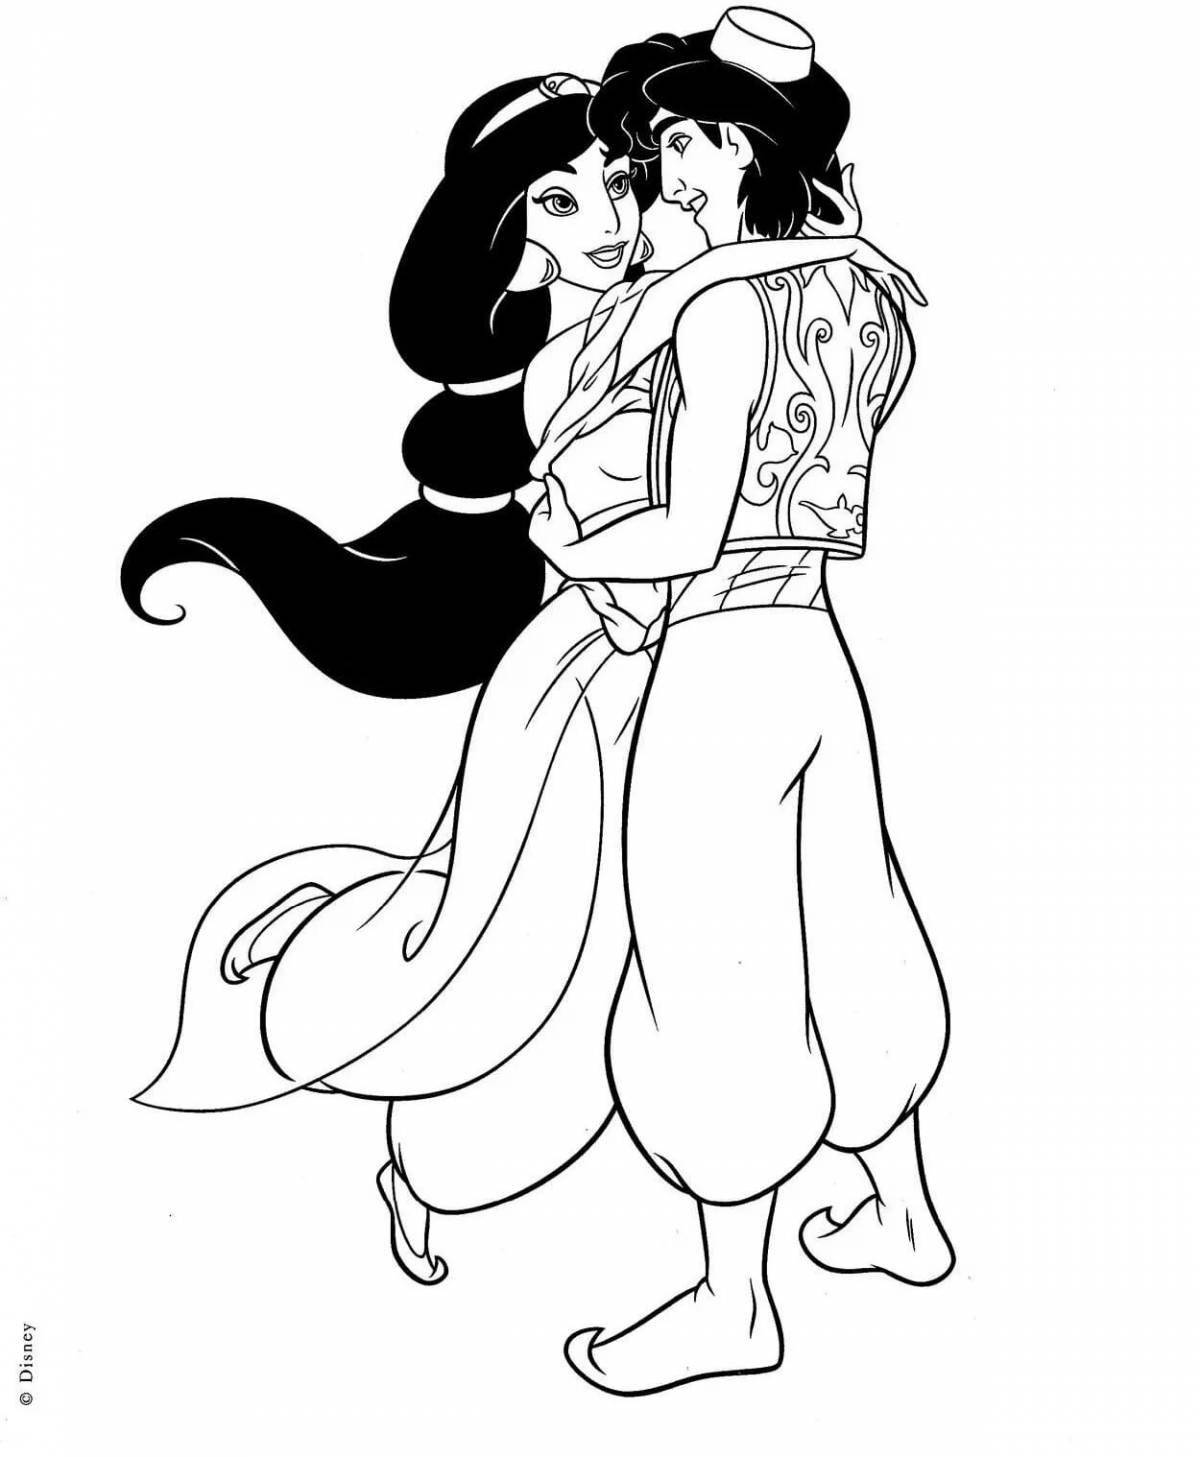 Wonderful Aladdin and Jasmine coloring book